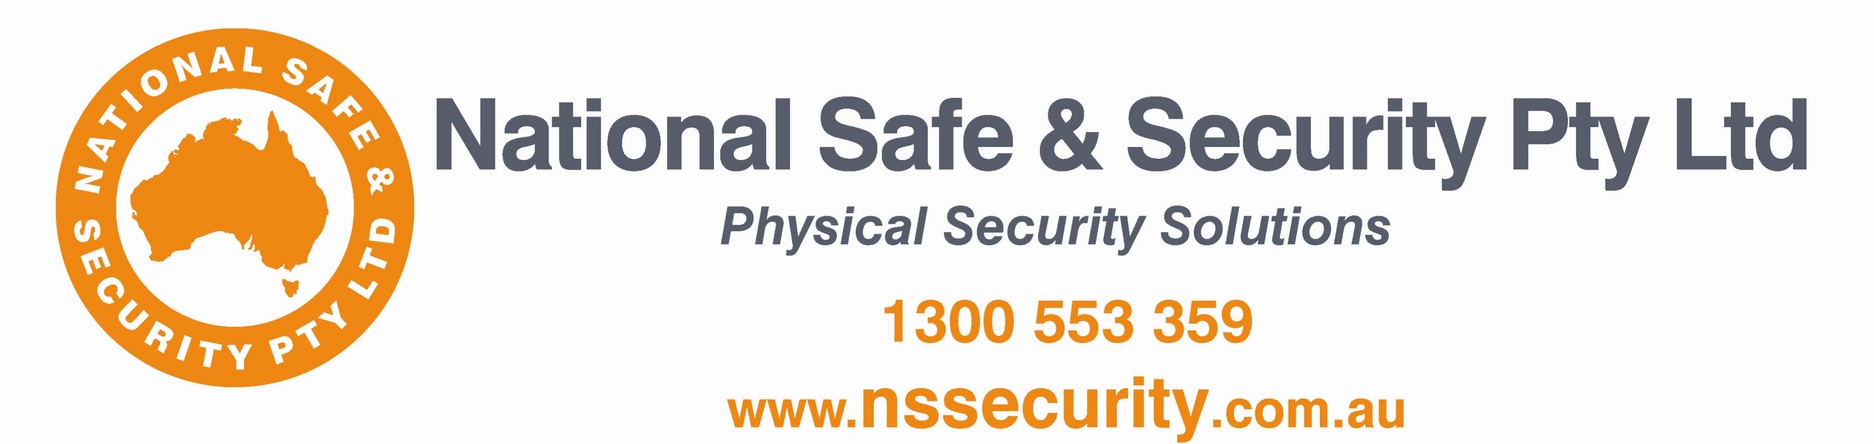 National Safe & Security - logo 2013